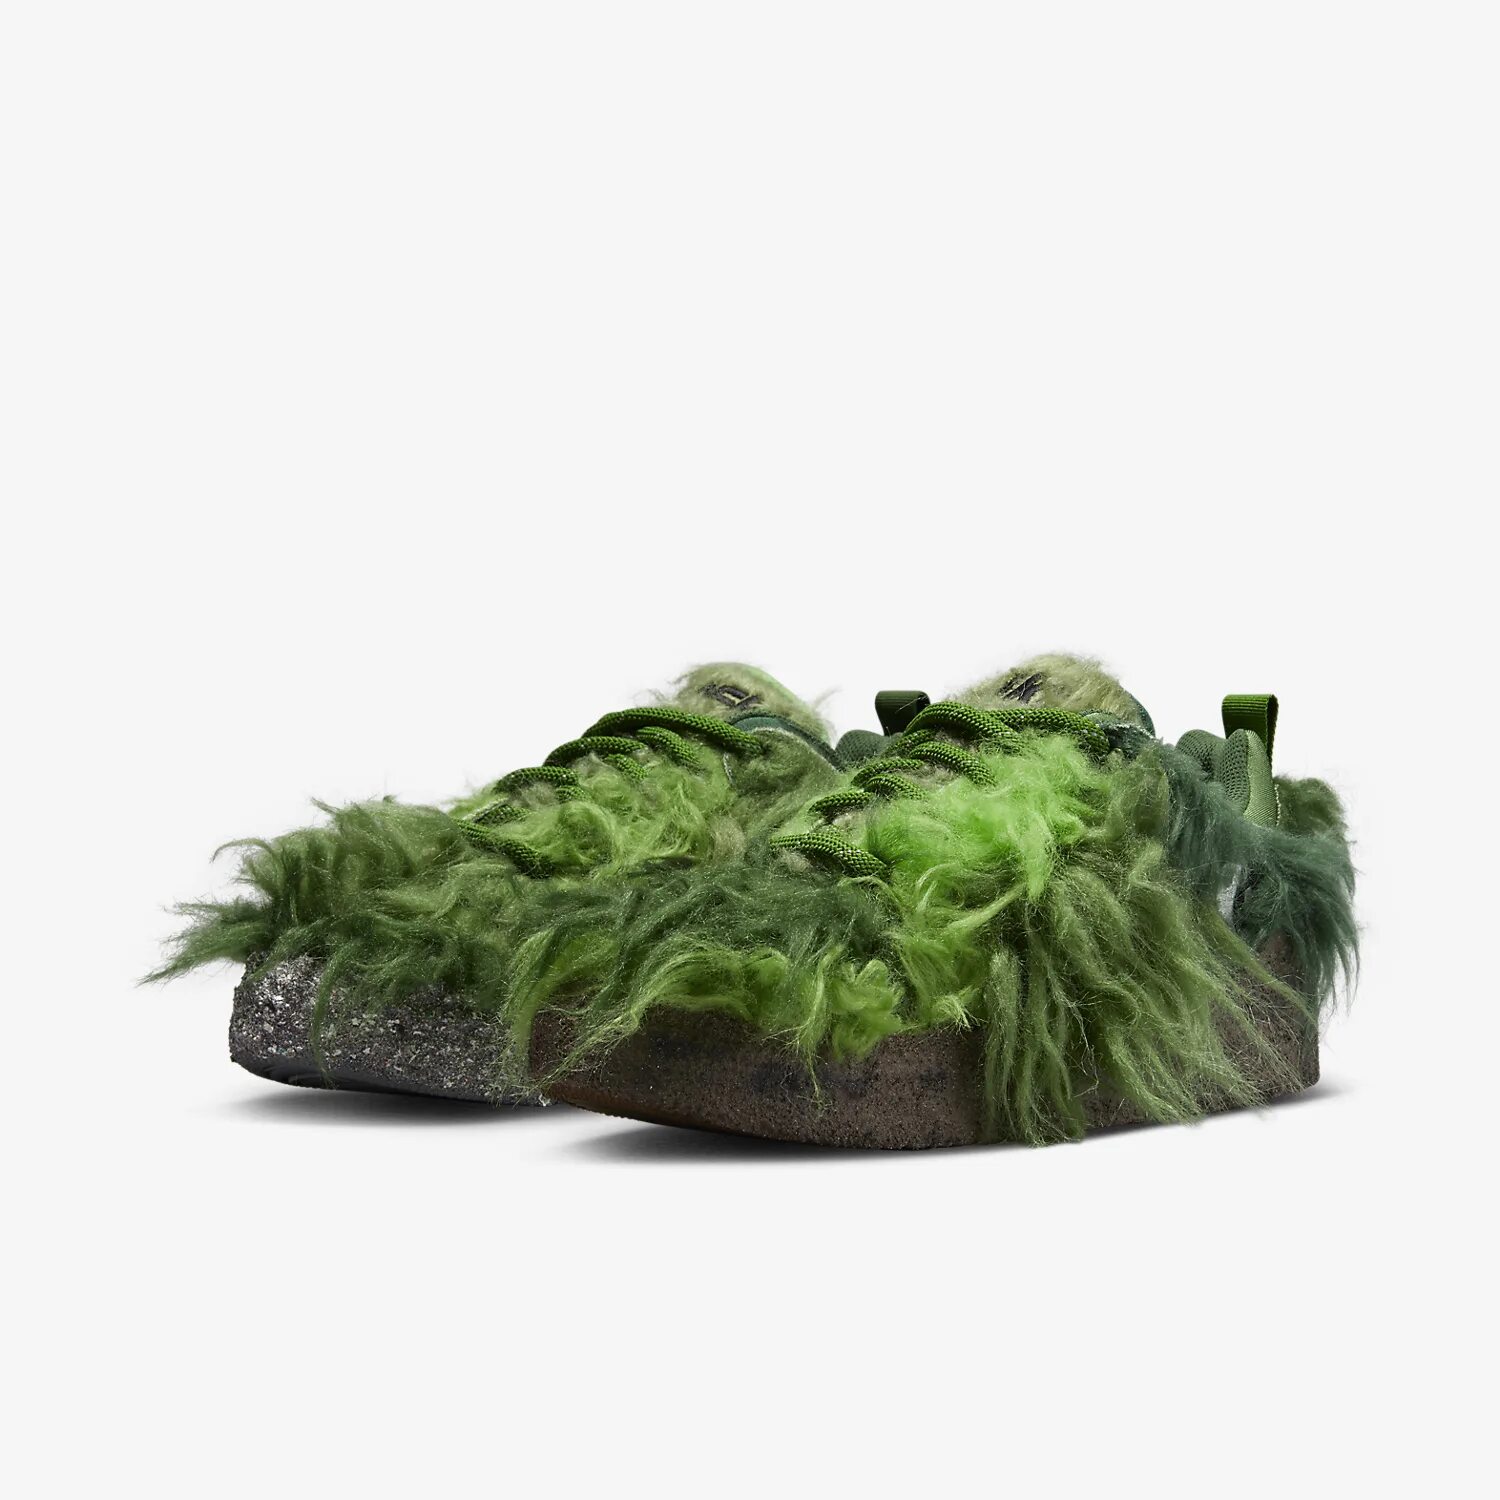 Nike Flea 1 x Cactus. CPFM Flea 1. Кактус Плант Флеа Маркет. Cactus Plant Flea Market x Nike CPFM Flea 1 «Overgrown».